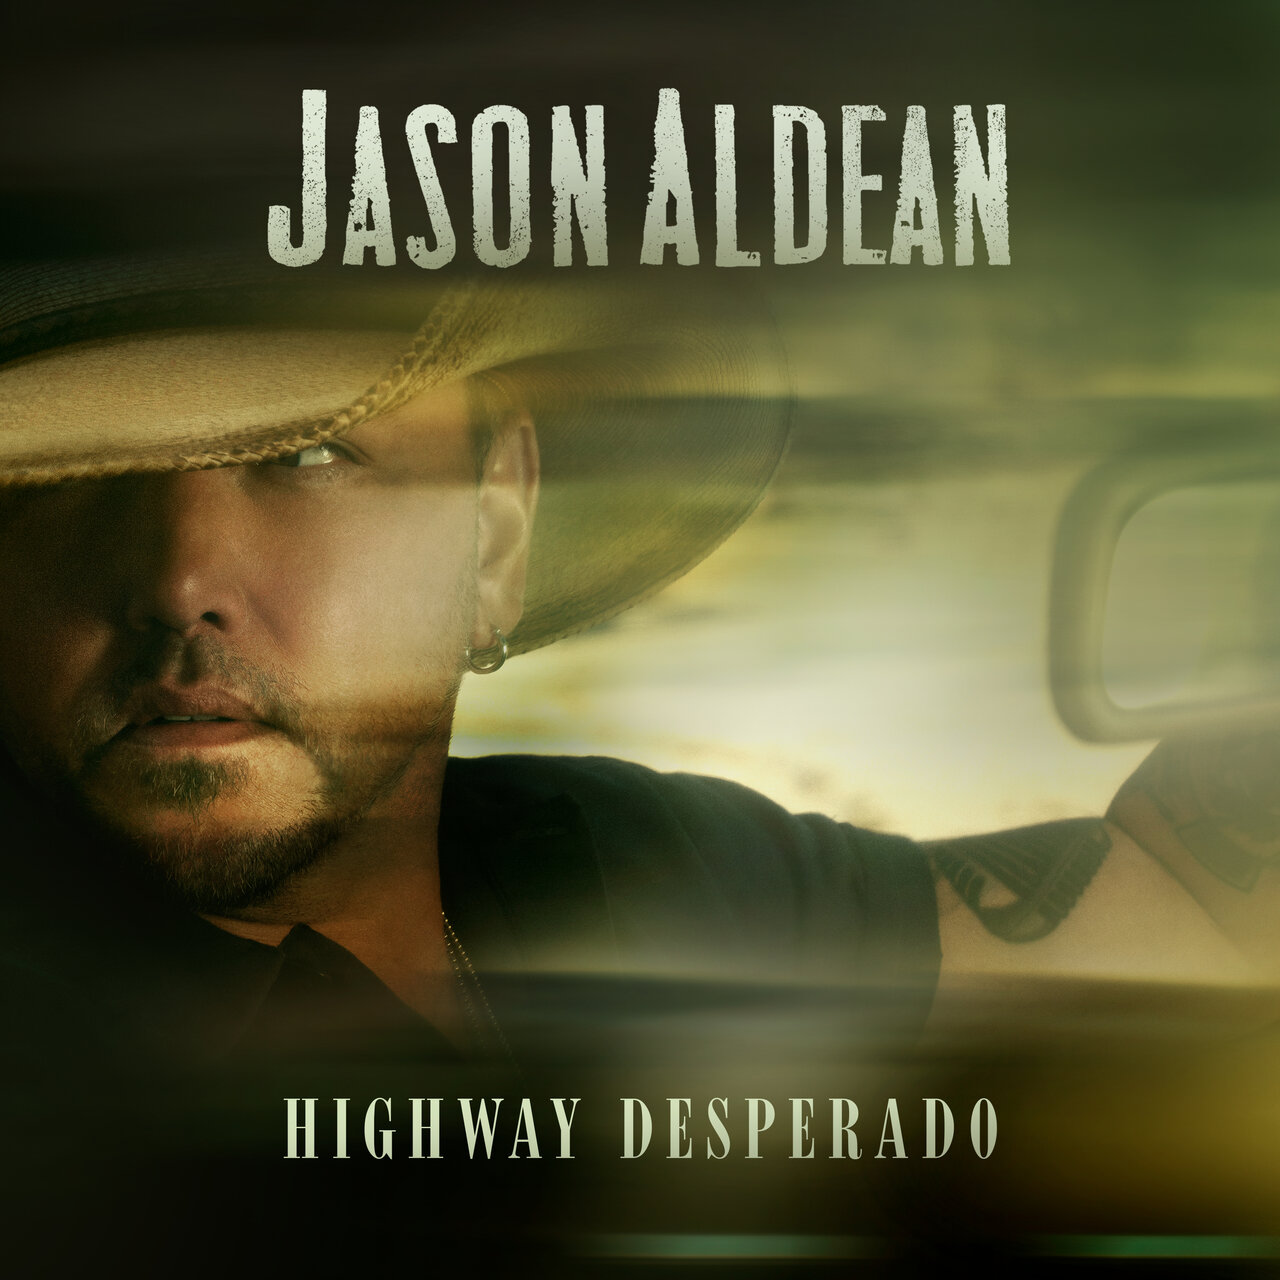 Jason Aldean Highway Desperado cover artwork